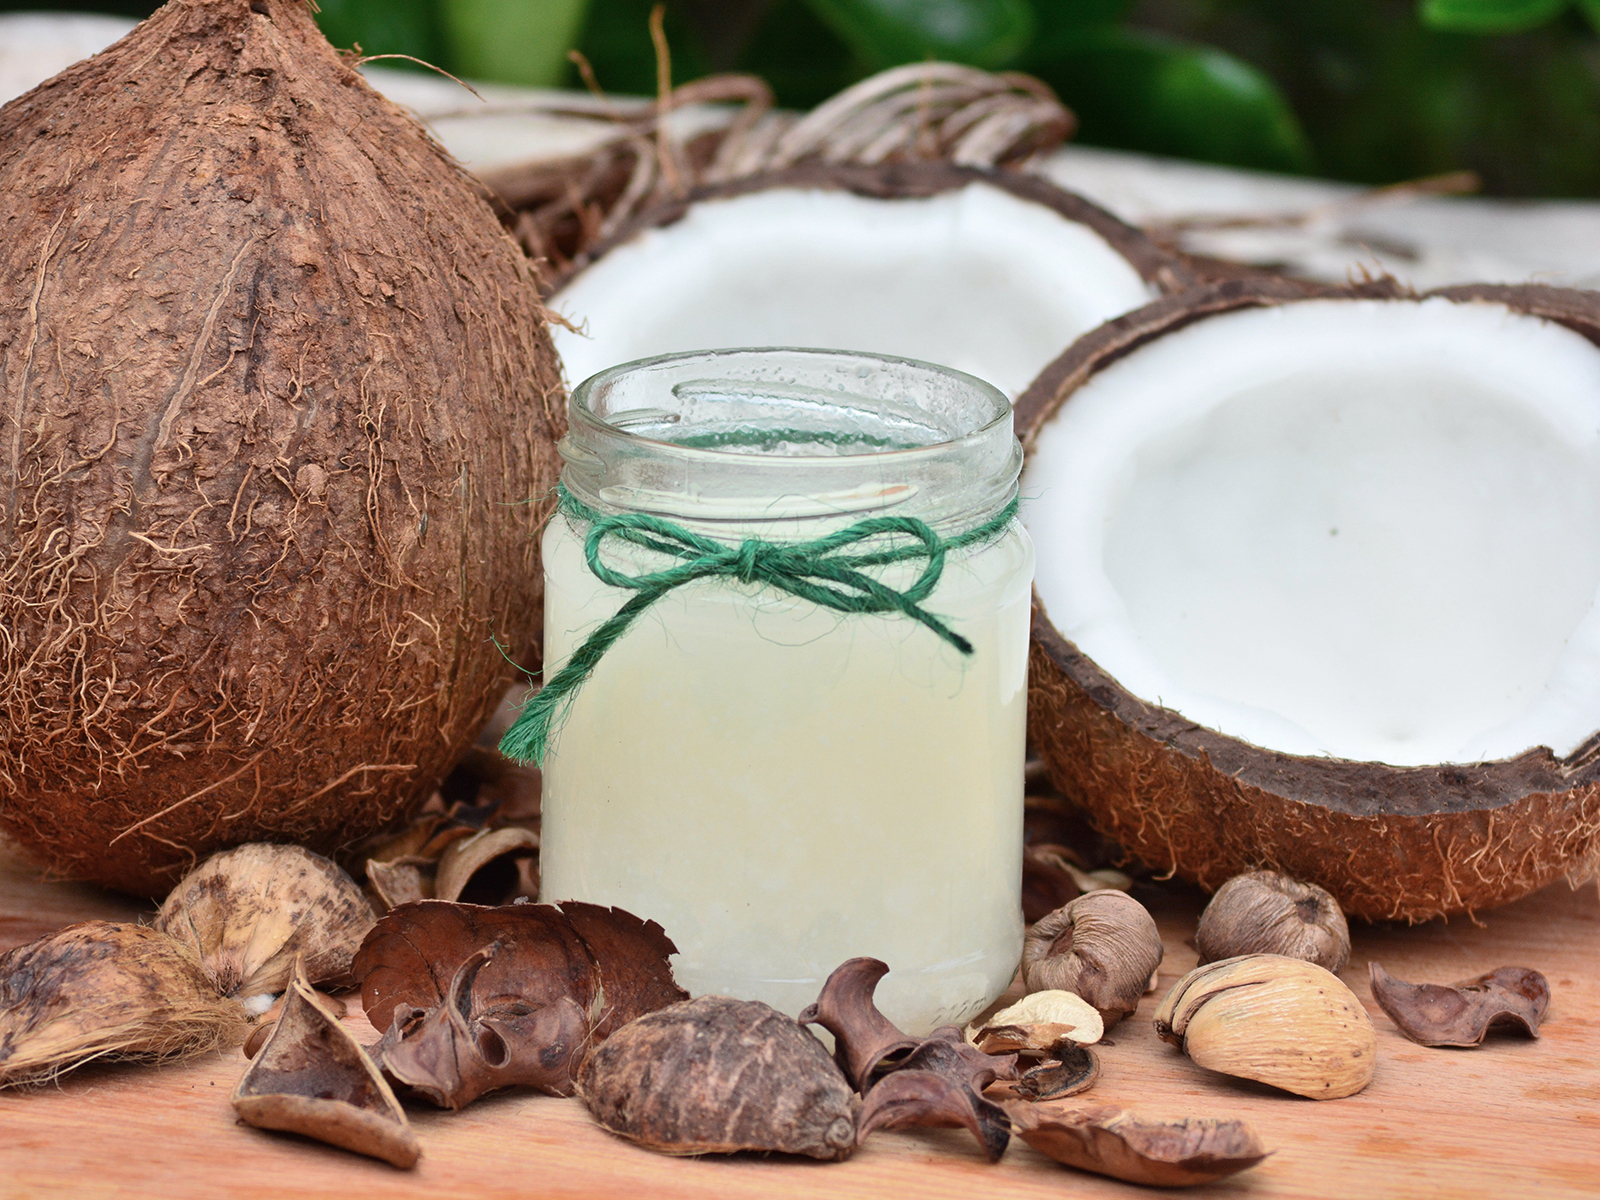 Is coconut oil good for teeth?